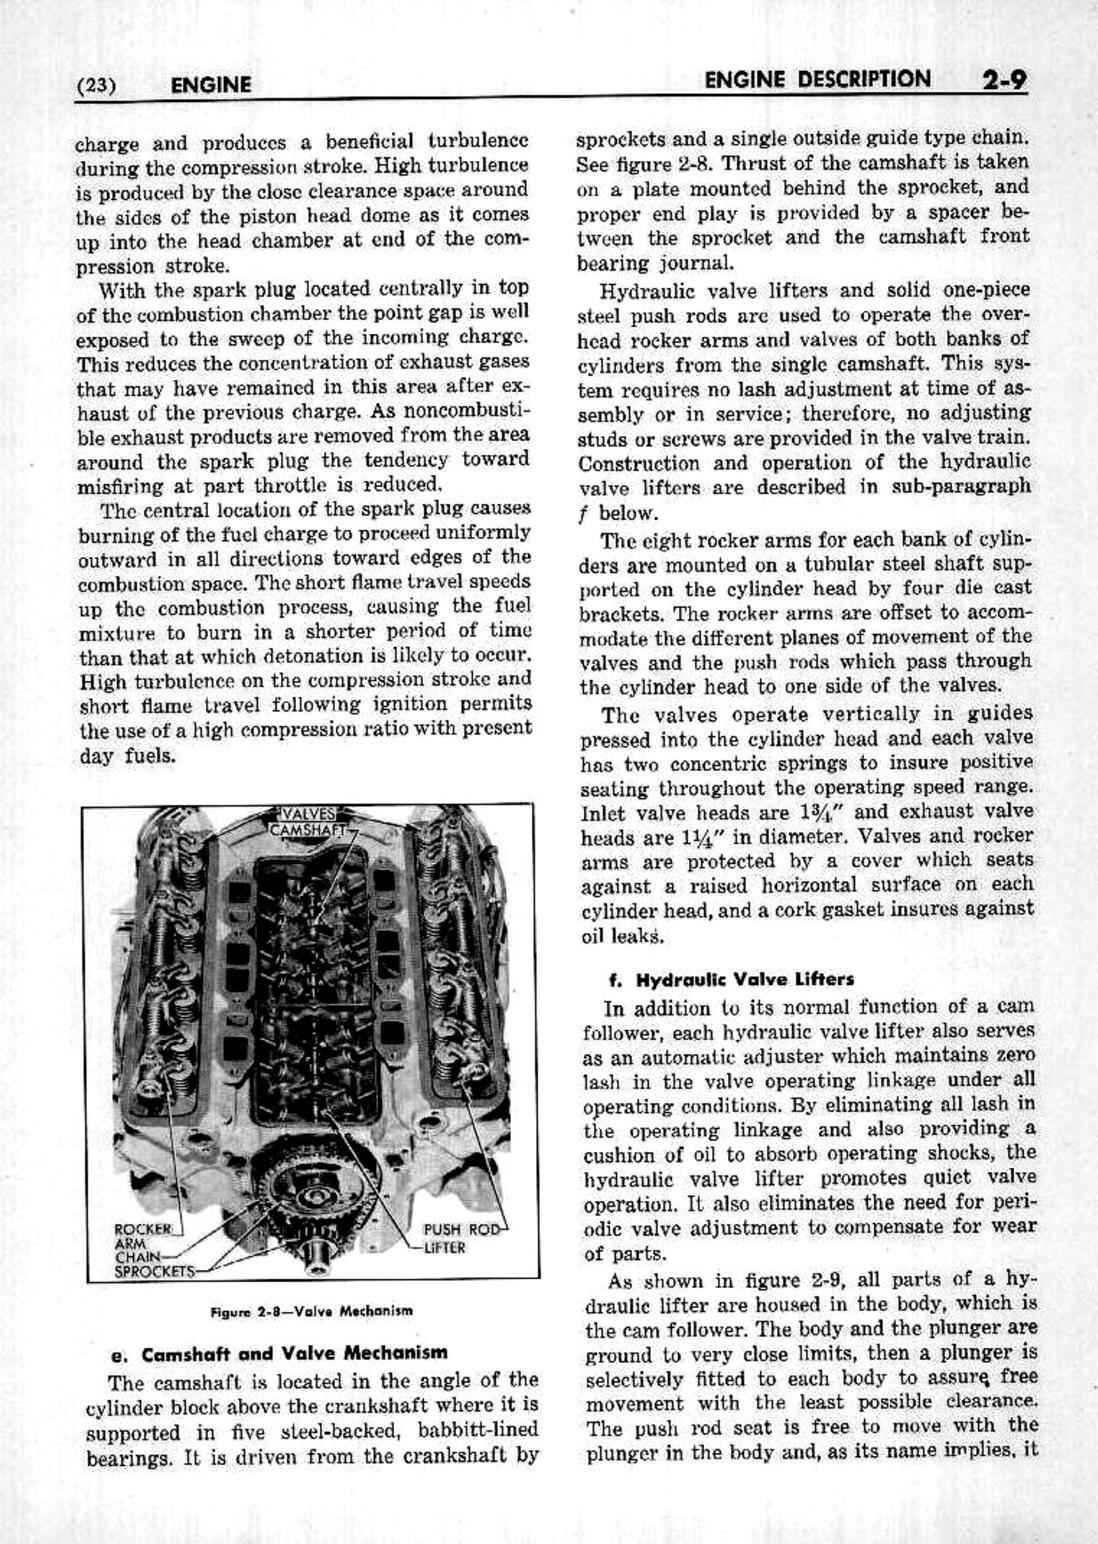 n_03 1953 Buick Shop Manual - Engine-009-009.jpg